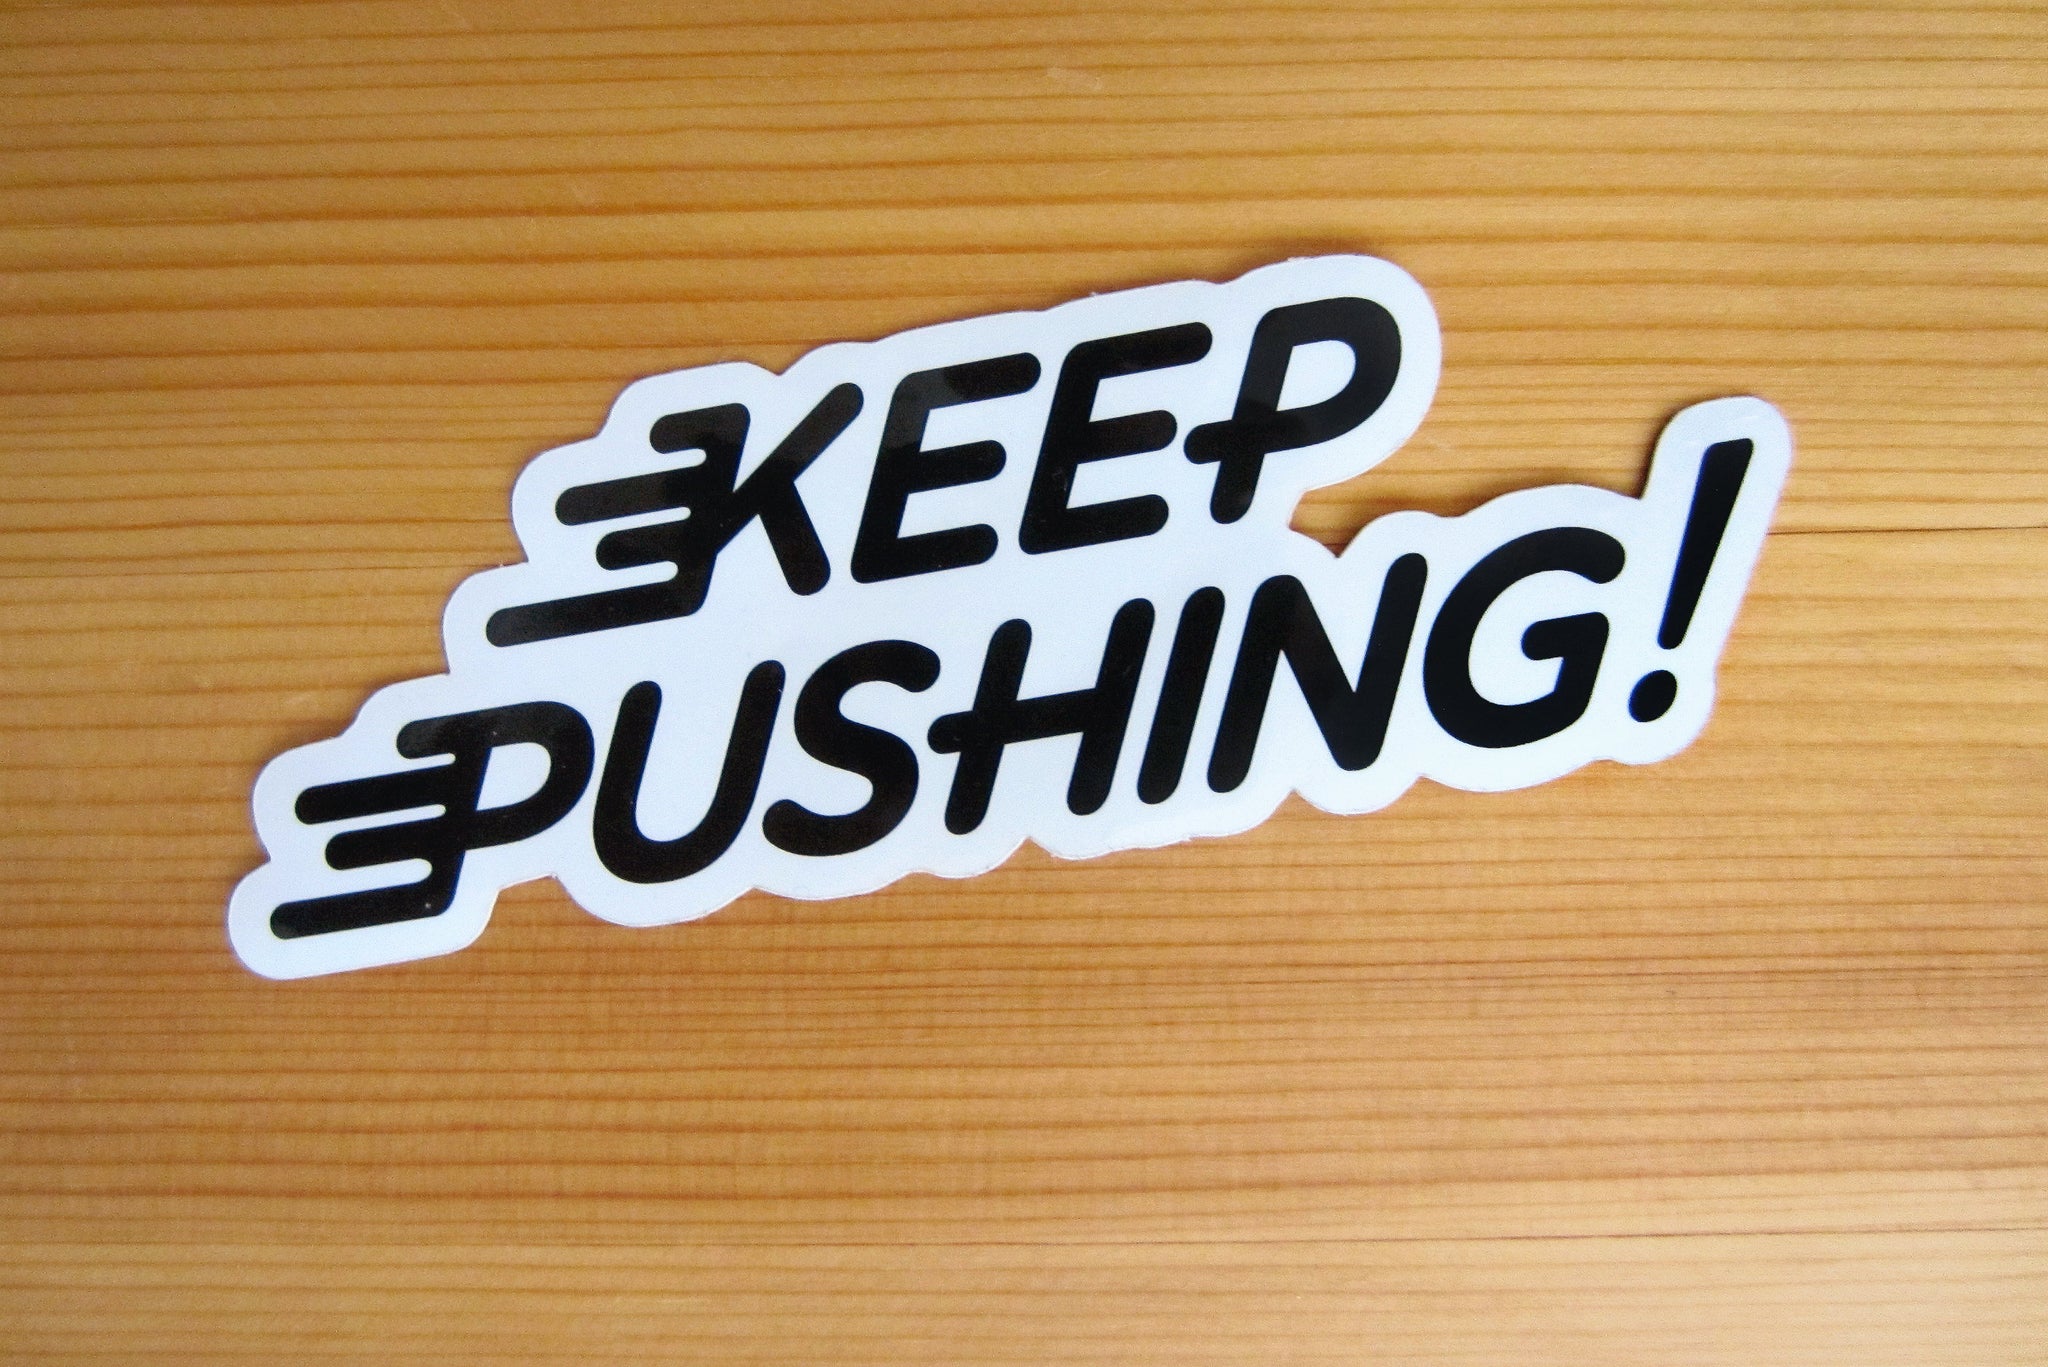 Keep Pushing! Glossy Vinyl Sticker